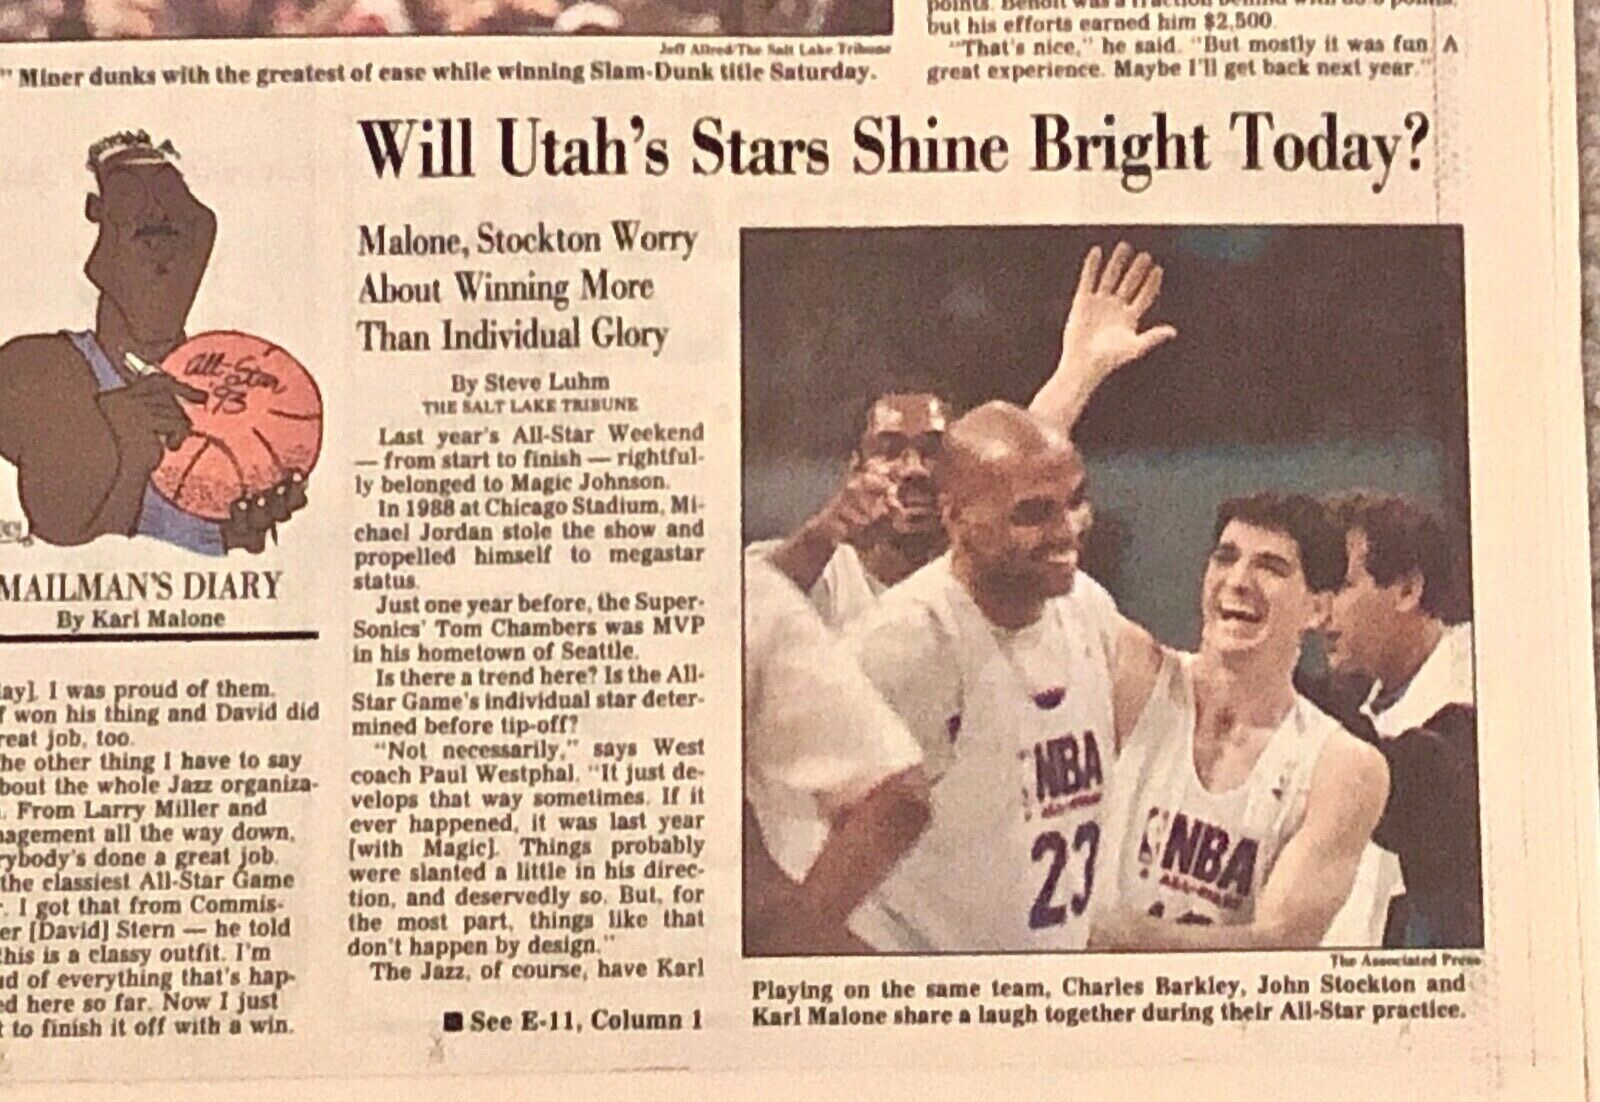 HAROLD MINER "BABY JORDAN" WINS 1993 NBA SLAM DUNK TITLE- UTAH NEWSPAPERS (2) Deseret News + Salt Lake Tribune - фотография #10